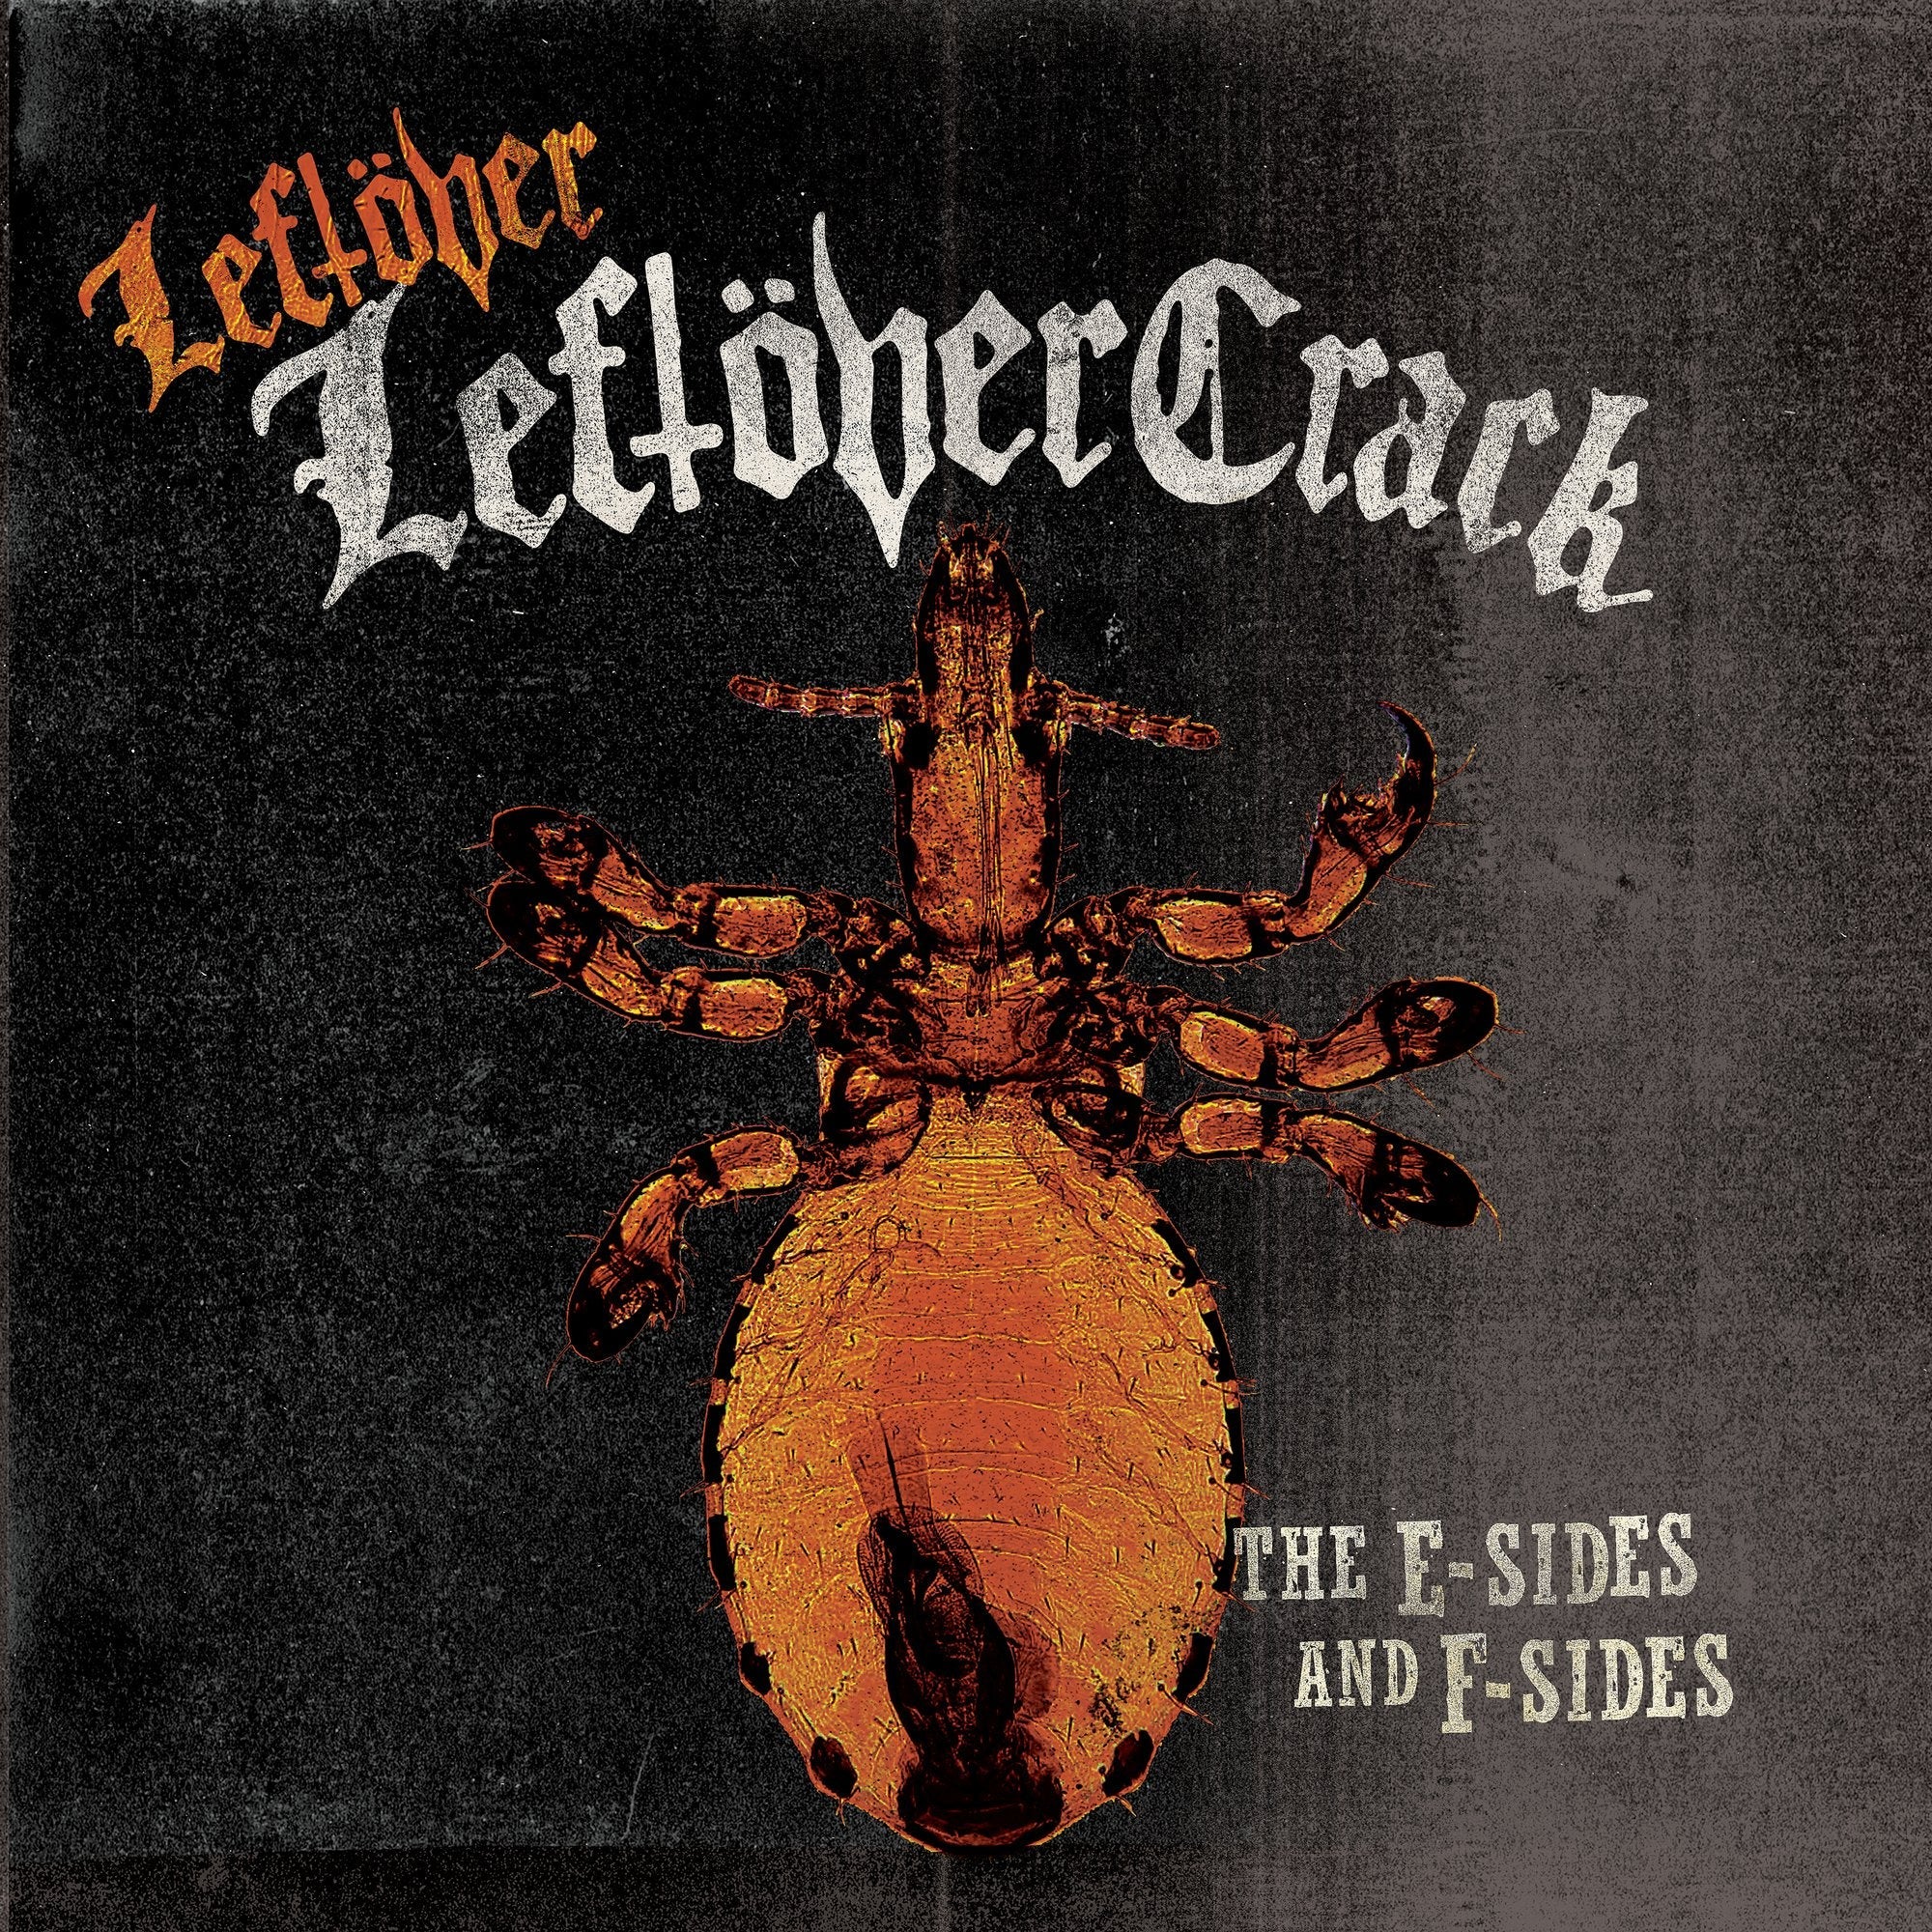 Leftover Crack - The E-Sides and F-Sides 2xLP - Vinyl - Fat Wreck